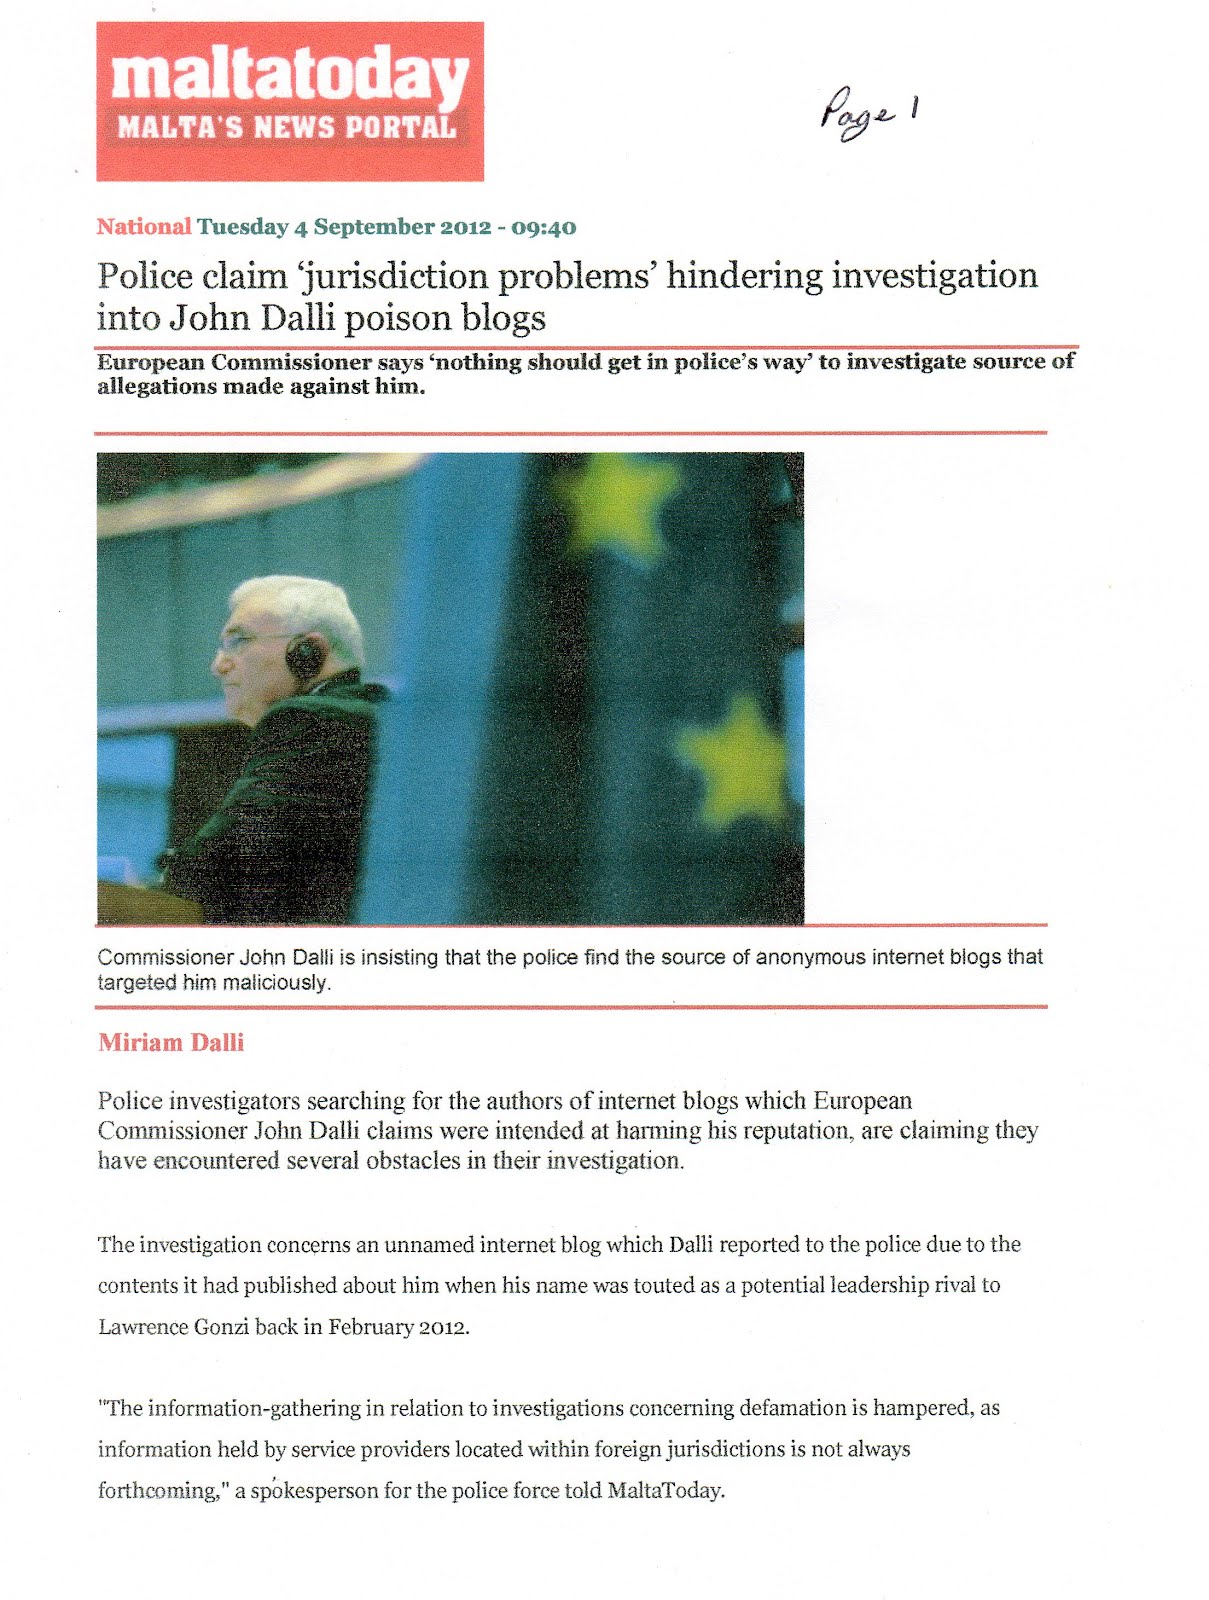 P1 - John Dalli Reports Blogs To Police